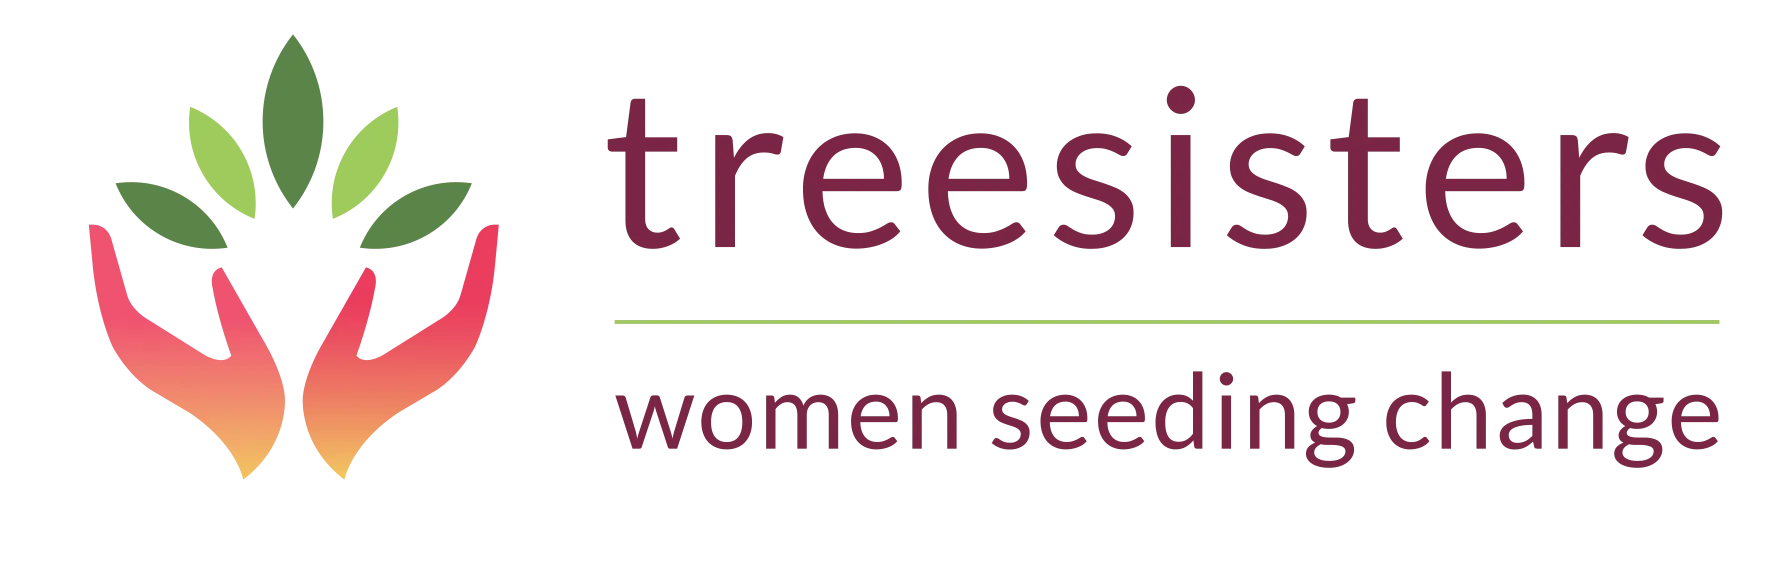 Treesisters Logo